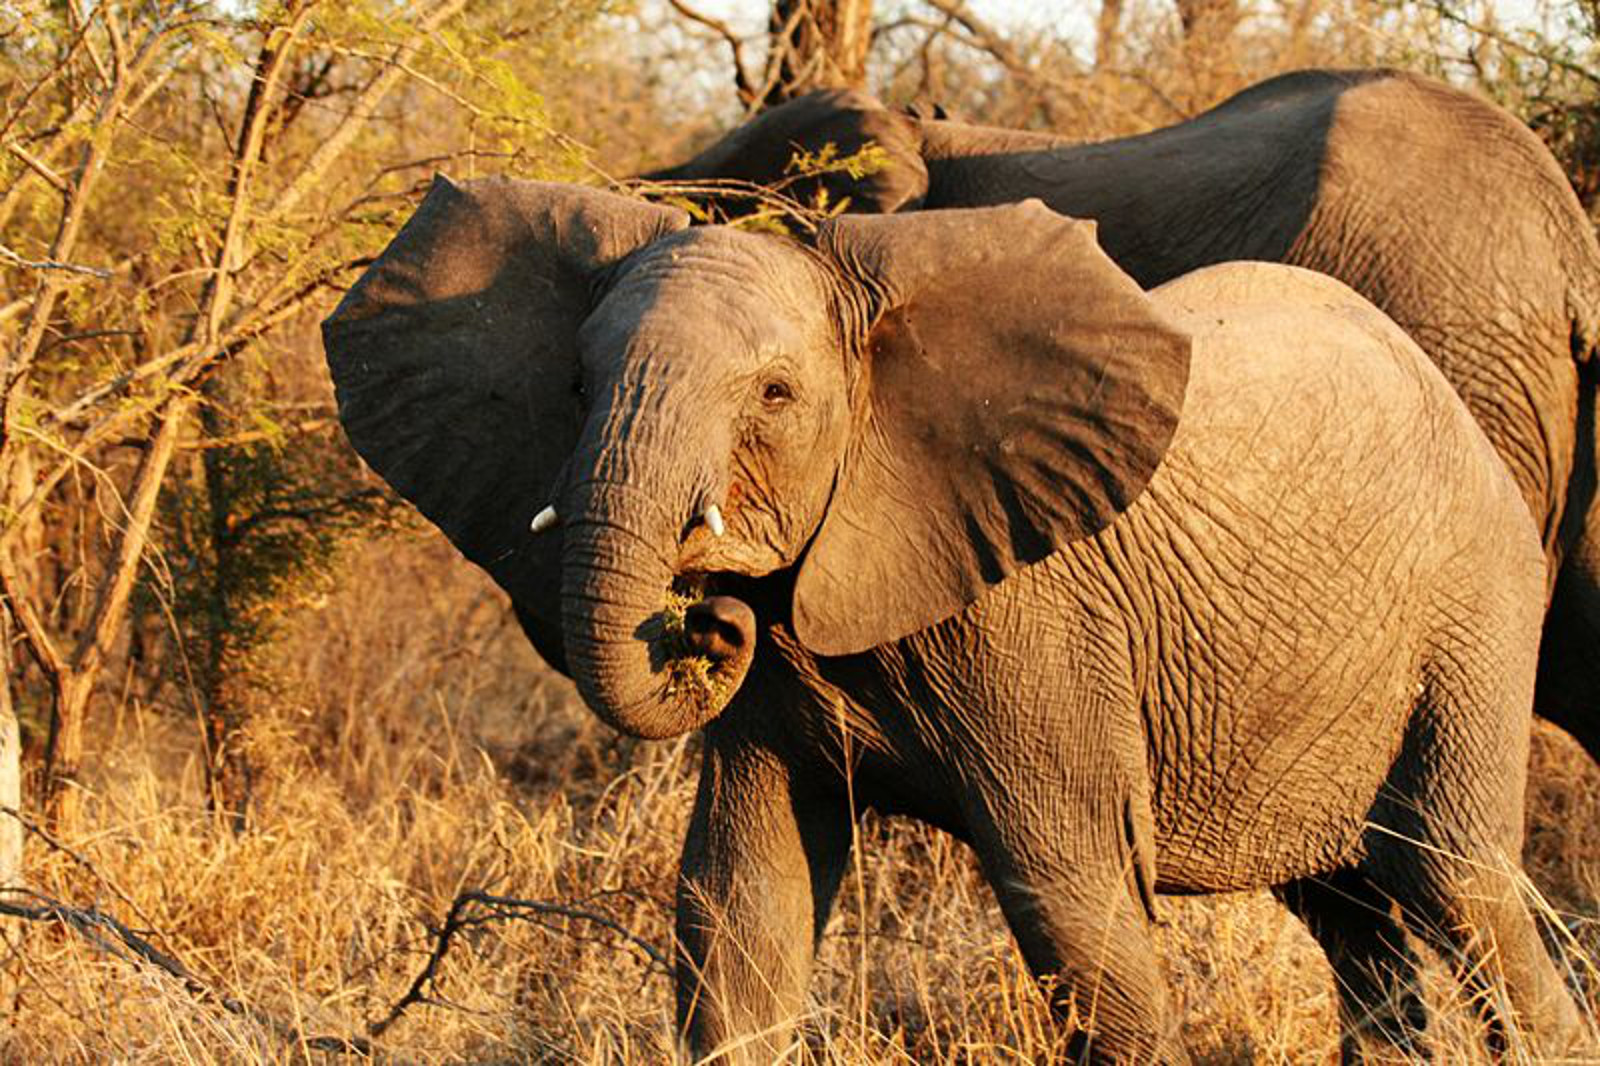 Saving Africa’s Elephants